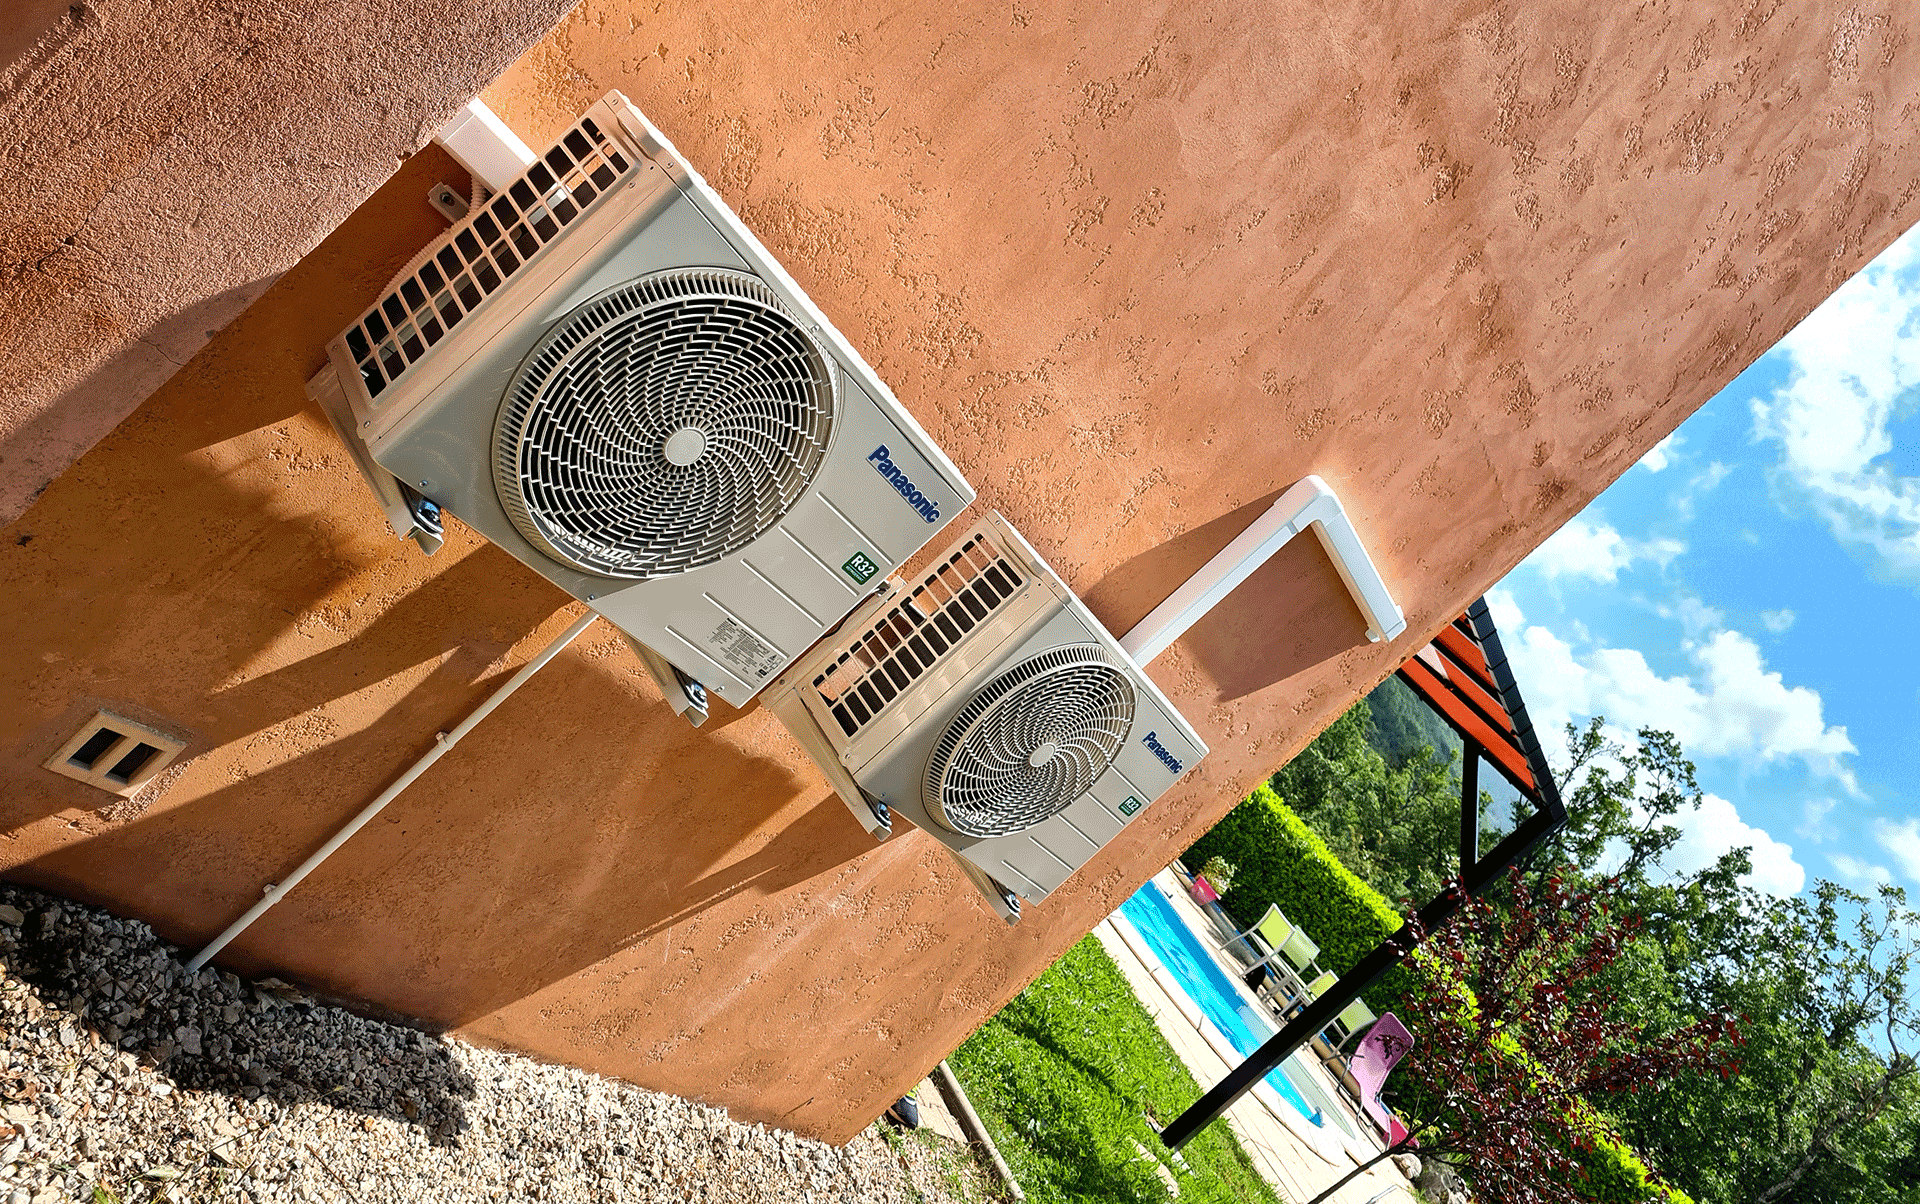 Installation de climatisation réversible à Grasse, Cannes, Antibes, 06 -  STME